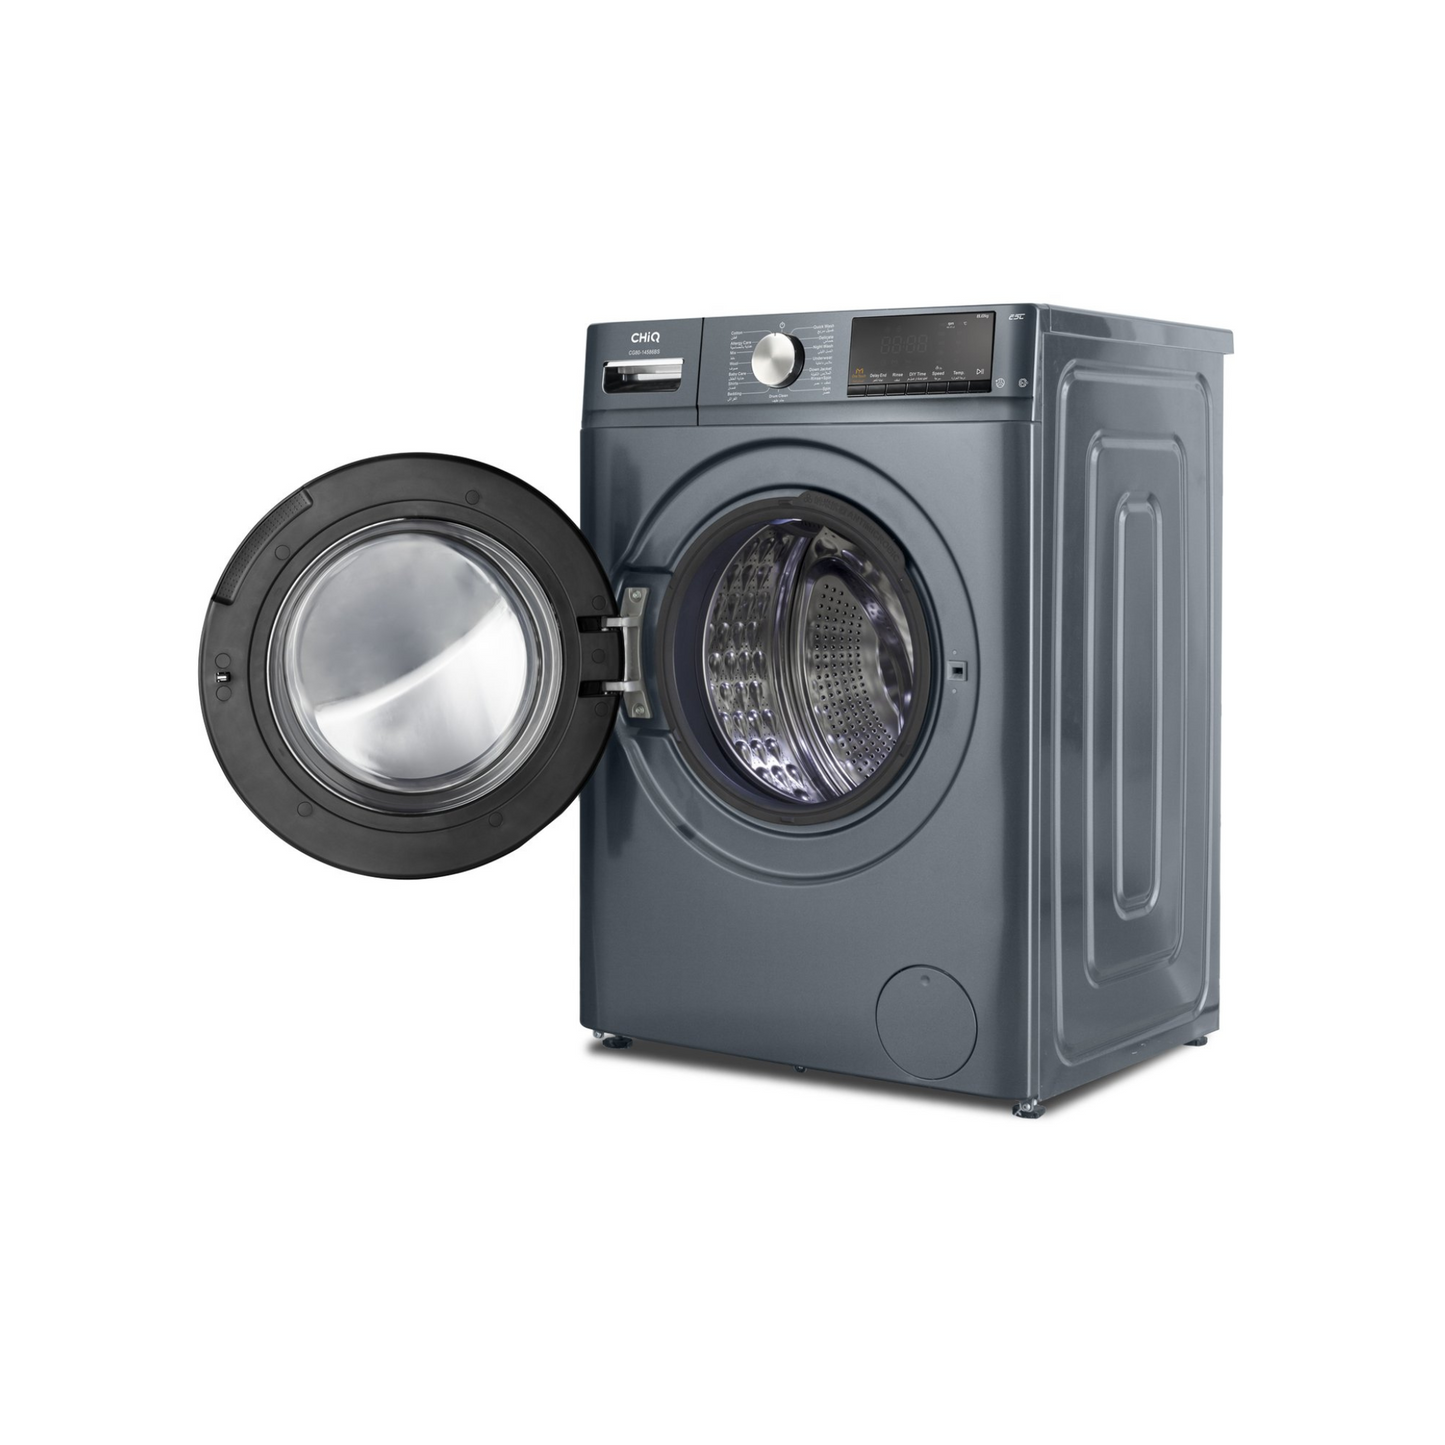 ChiQ 8KG Fully Automatic Washing Machine, CG80-14586BS